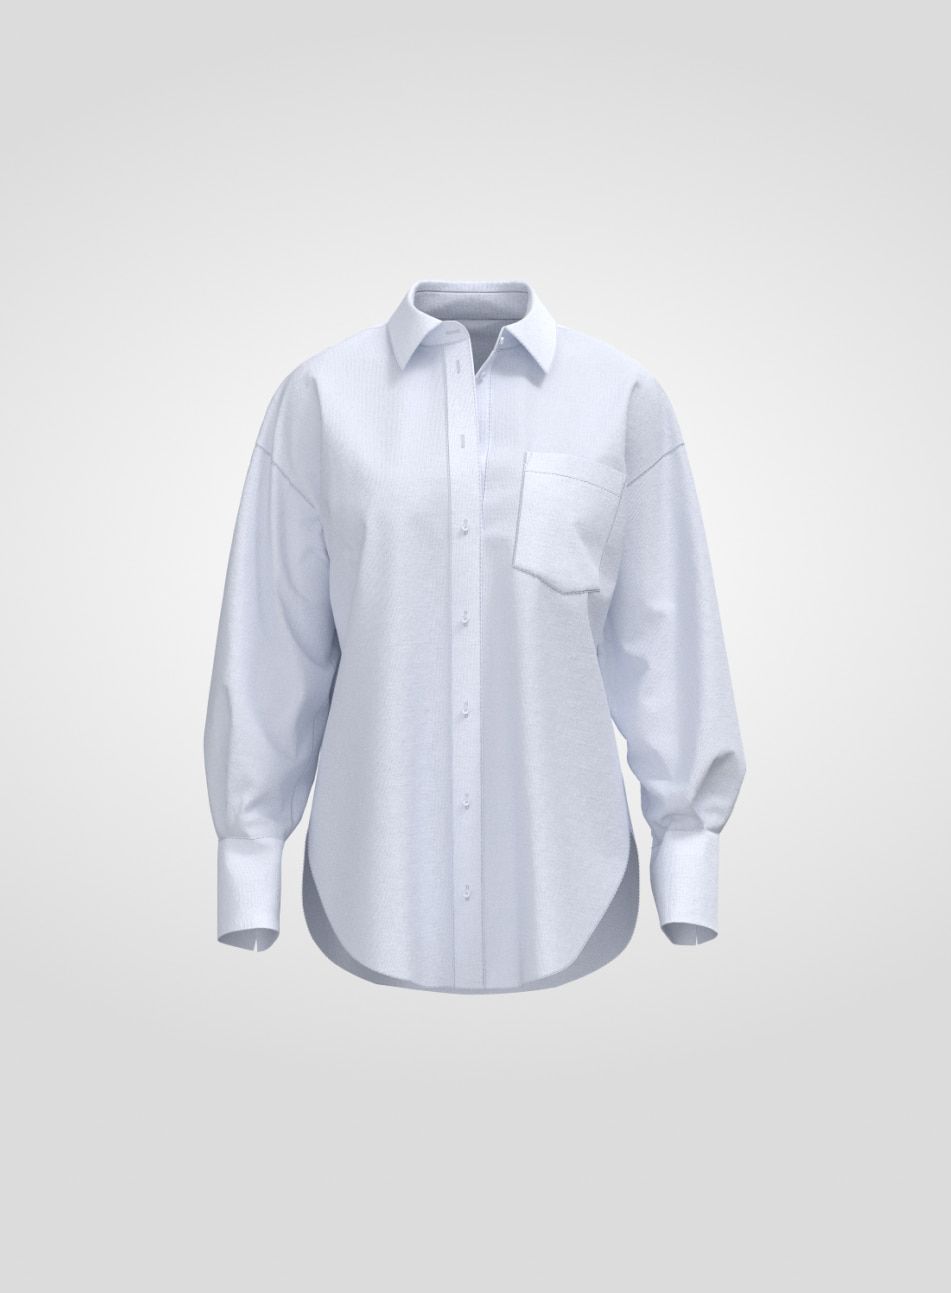 A white button down shirt.